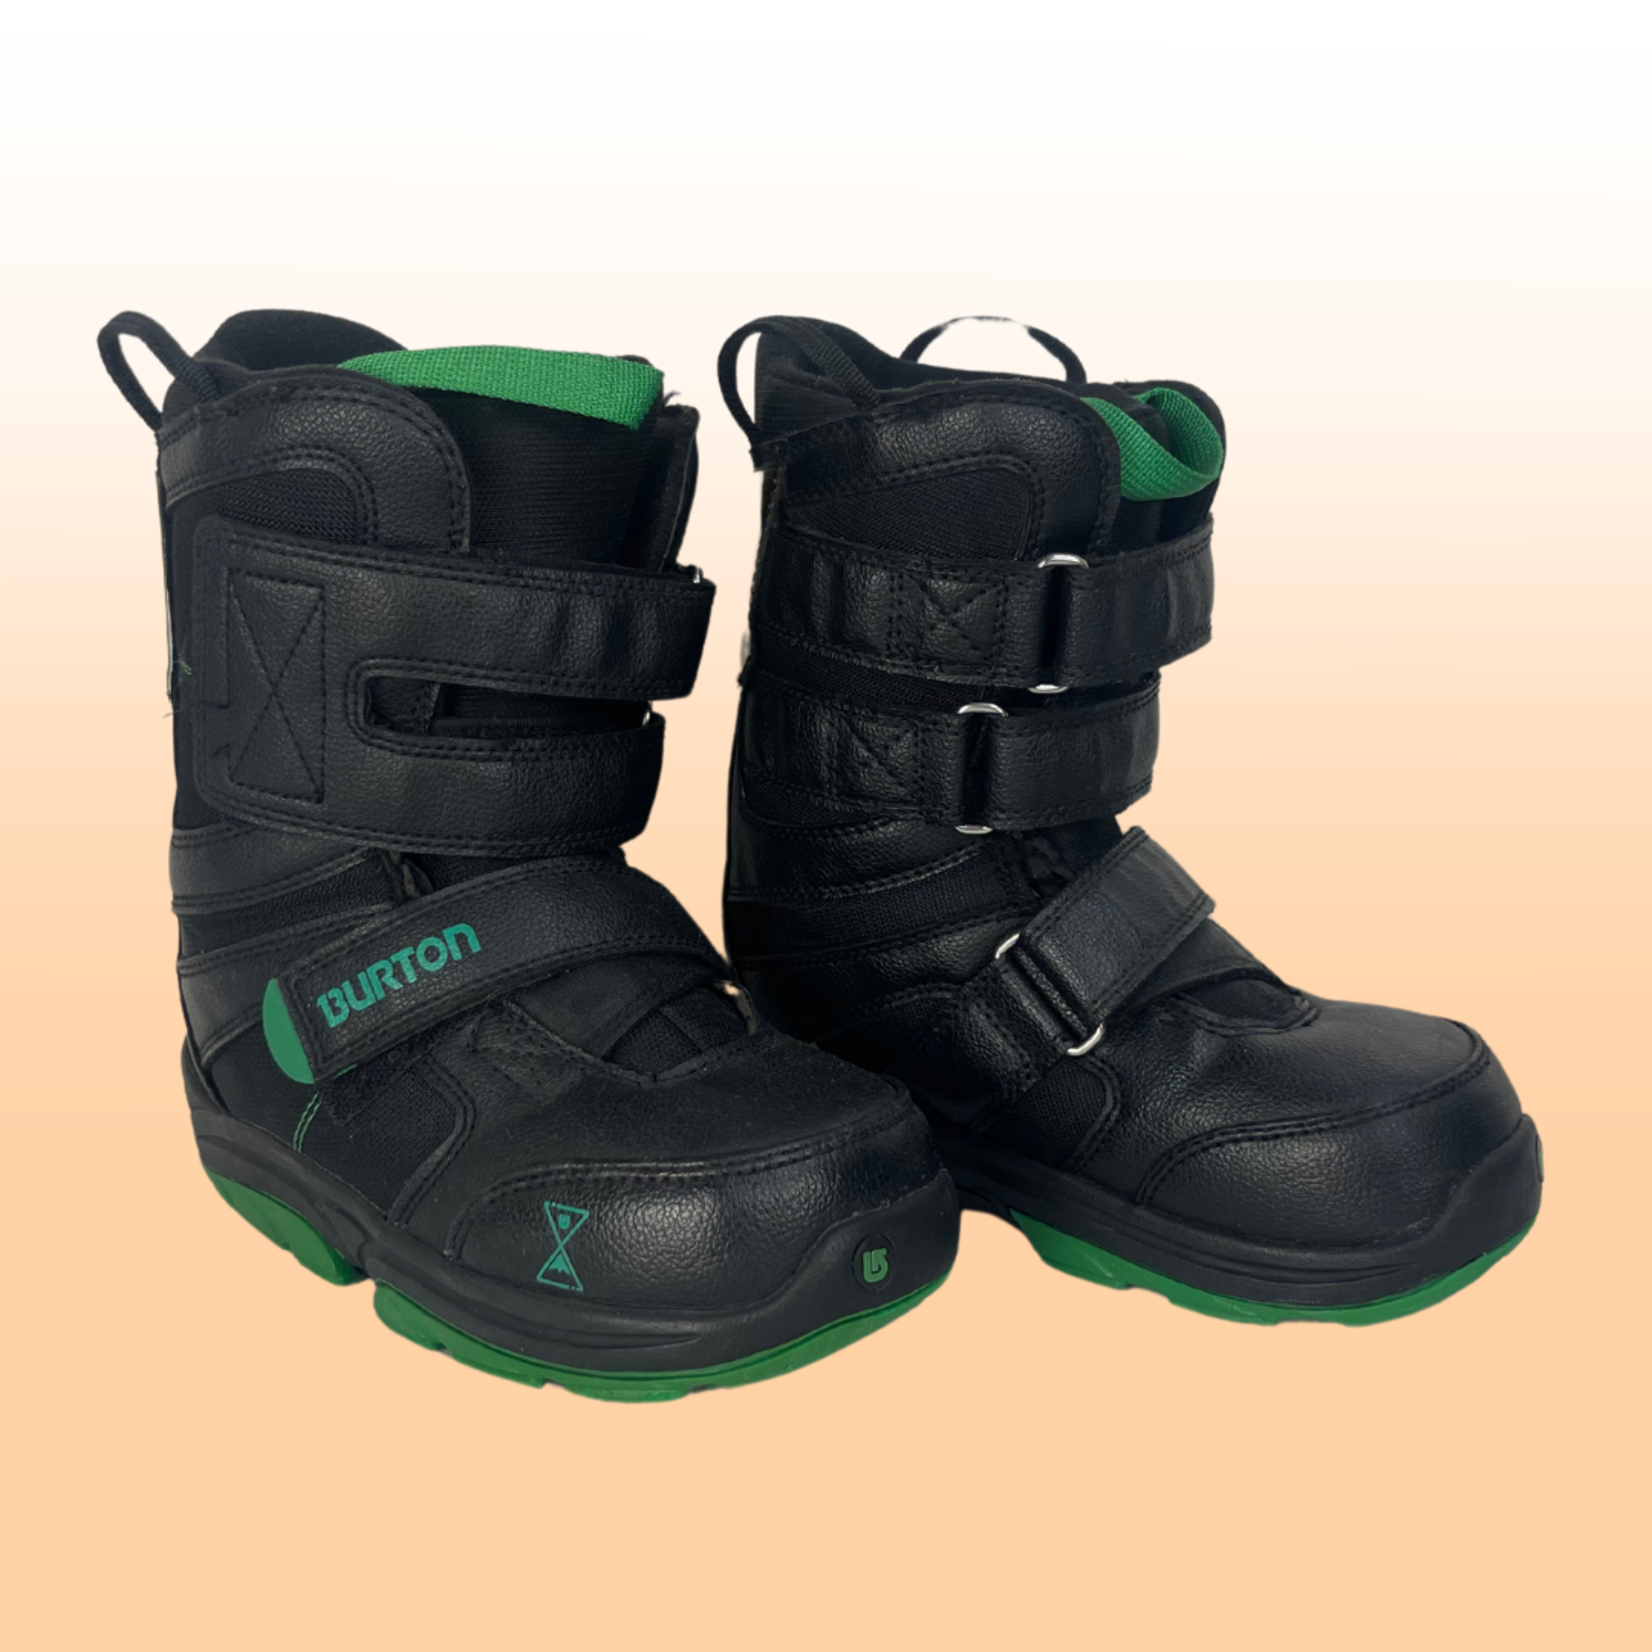 Burton Progression Kids Snowboard Boots, Size 5 YOUTH